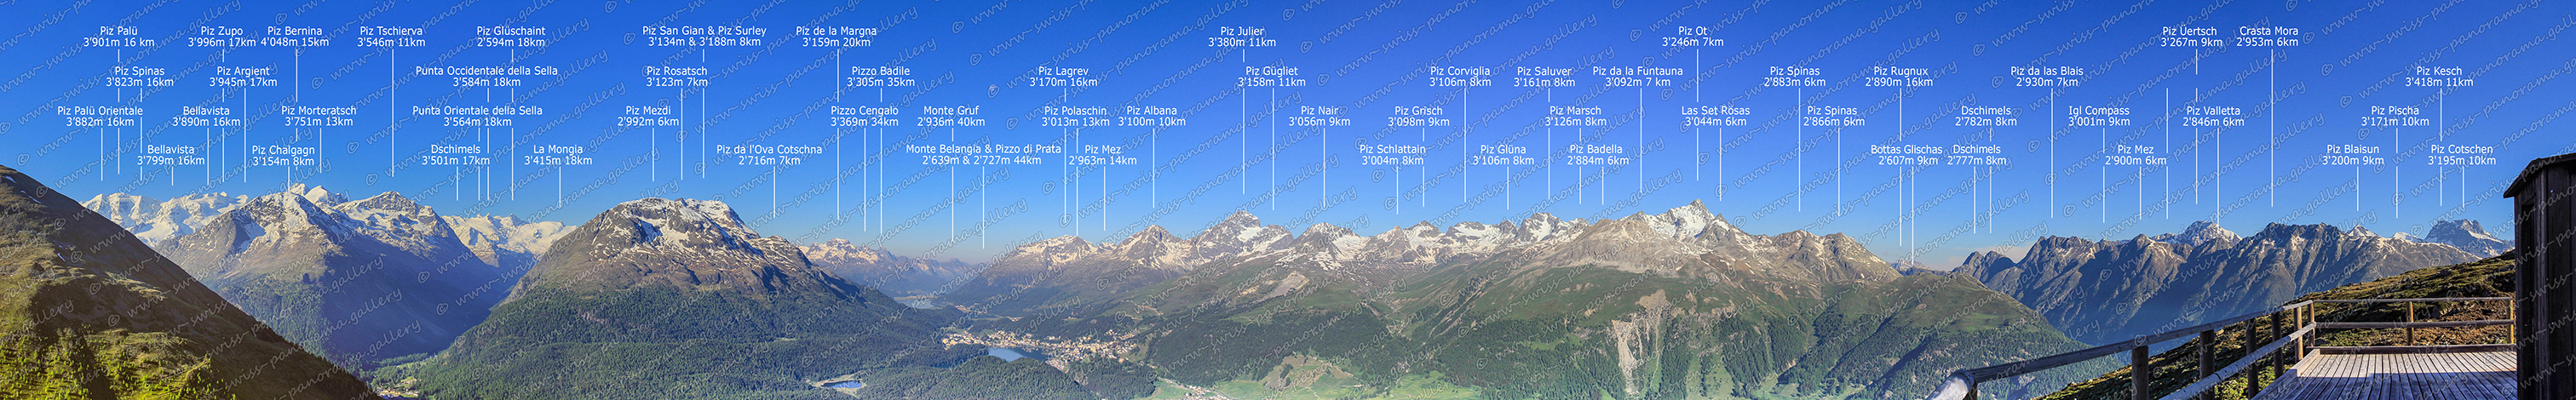 Swiss panorama Muottas Muragl, Sichtbare Gipfel, Piz Cotschen 3'195 m (10 km),Piz Kesch 3'418 m (11 km), Piz de la Margna 3'159 m (20 km), Piz Gügliet 3158m 11km. Piz Julier 3'380 m (11 km), Piz Pischa 3'171 m (10 km). Piz Blaisun 3'200 m (9 km), Crasta Mora 2'953 m (6 km), Piz Uertsch 3'267 m (9 km), Piz Üertsch 3287m, Piz Mez 2'900 m (6 km), Igl Compass 3'001 m (9 km), Bottas Glischas 2607m, Dschimels 2'777 m & 2'782 m (8 km), Piz Rugnux, Dschimels 2'777 m & 2'782 m (8 km), Piz da las Blais 2'930 m (3 km), Piz Spinas 2'883 m (6 km), Piz Ot 3'246 m (7 km), Piz Badells 2884m 5km, Las Set Rösas 3'044 m (6 km), Piz de la Funtaune 3'092 m (7 km), Piz Saluver 3'161 m (8 km), Piz Marsch 3'126 m (8 km), Piz Corviglia 3'106 m (8 km), Piz Glüna 3'106 m (8 km), Piz Grisch 3'098 m (9 km), Piz Schlattain 3'004 m (8 km), Piz Nair 3'056 m (9 km), Piz Albana 3'100 m (10 km), Monte Belangia & Pizzo di Prata 2639m 2727m 44km, Pizzo Badile 3305m 35km, Pizzo Cengalo 3369m 34km, Monte Gruf 2'936m 40km, Piz Polaschin 3013m, Piz Lagrev 3'170 m (16 km), Piz Mez, 2'963 m (14 km), Piz da l'Ova Cotschna 2'716 m (7 km), Piz San Gian & Piz Surley (8 km (3'134 m & 3'188 m), Piz Rosatsch 3'123 m (7 km), Piz Mezdi 2'992 m (6 km). Piz Glüschaint 2'594 m (18 km), Punta Occidentale della Sella 3'584 m (18 km), Punta Orientale della Sella 3'564 m (18 km), La Mongia 3'415 m (18 km), Piz Tschierva 3'546 m (11 km), Piz Bernina 4'048 m (15 km), Piz Morteratsch 3'751 m (13 km), Piz Argient 3'945 m (17 km), Piz Zupo 3'996 m (17 km), Piz Muragl 3'157 m (3 km), Bellavista 3'922 m, Piz Palü 3'901 m (16 km), Piz Spinas 3'823 m (16 km), Bellavista 3'799 m,      